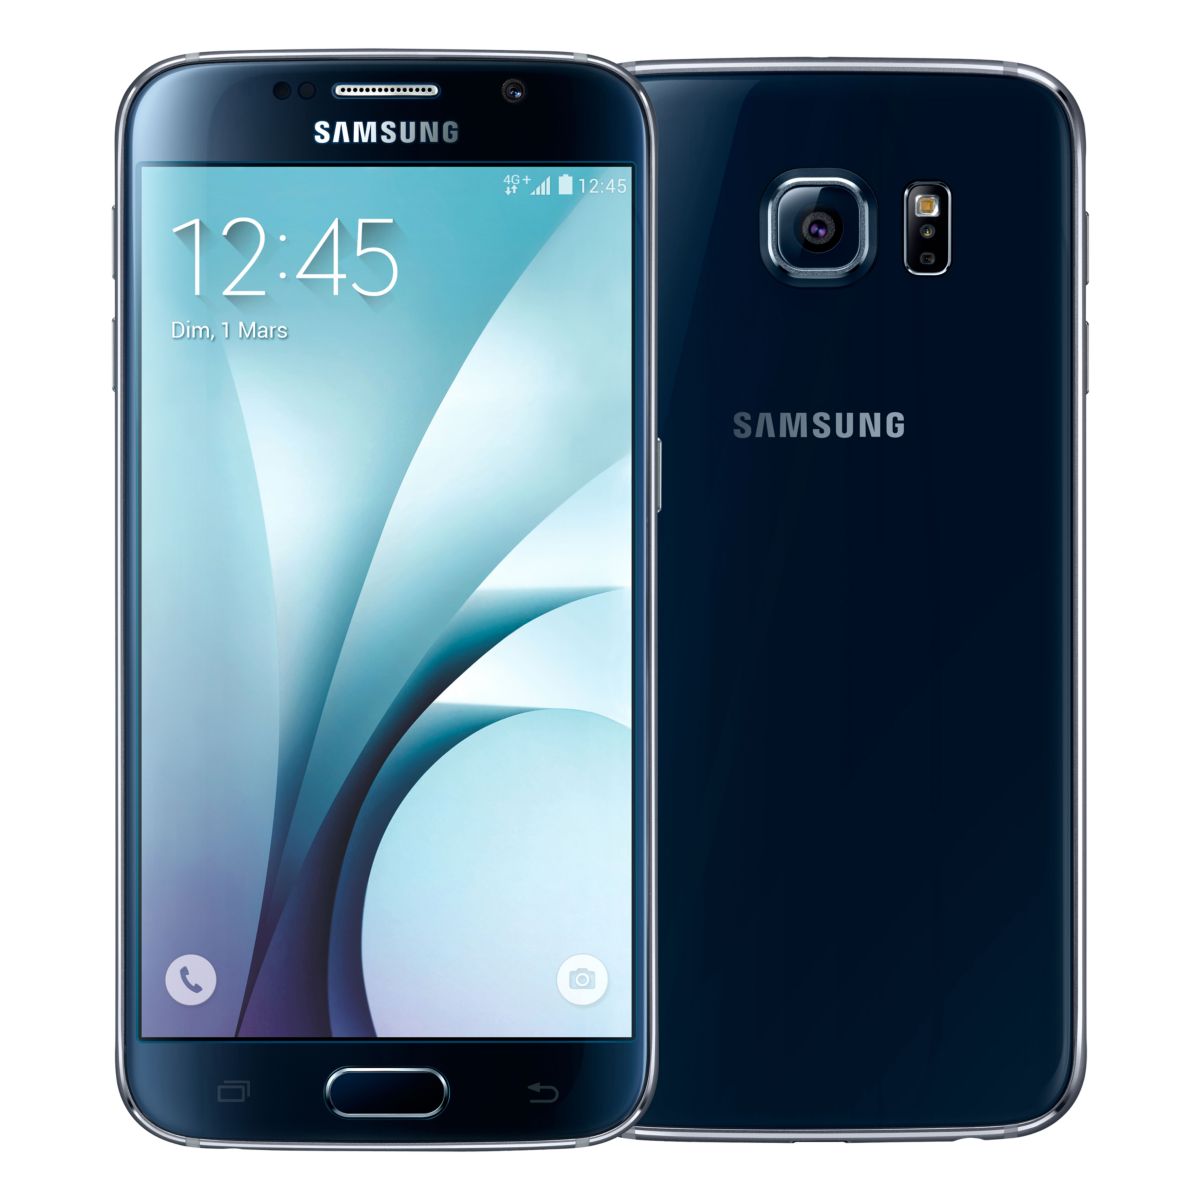 Smartphone Galaxy S6 32go Noir Cosmos Samsung, Smartphone Webdistrib